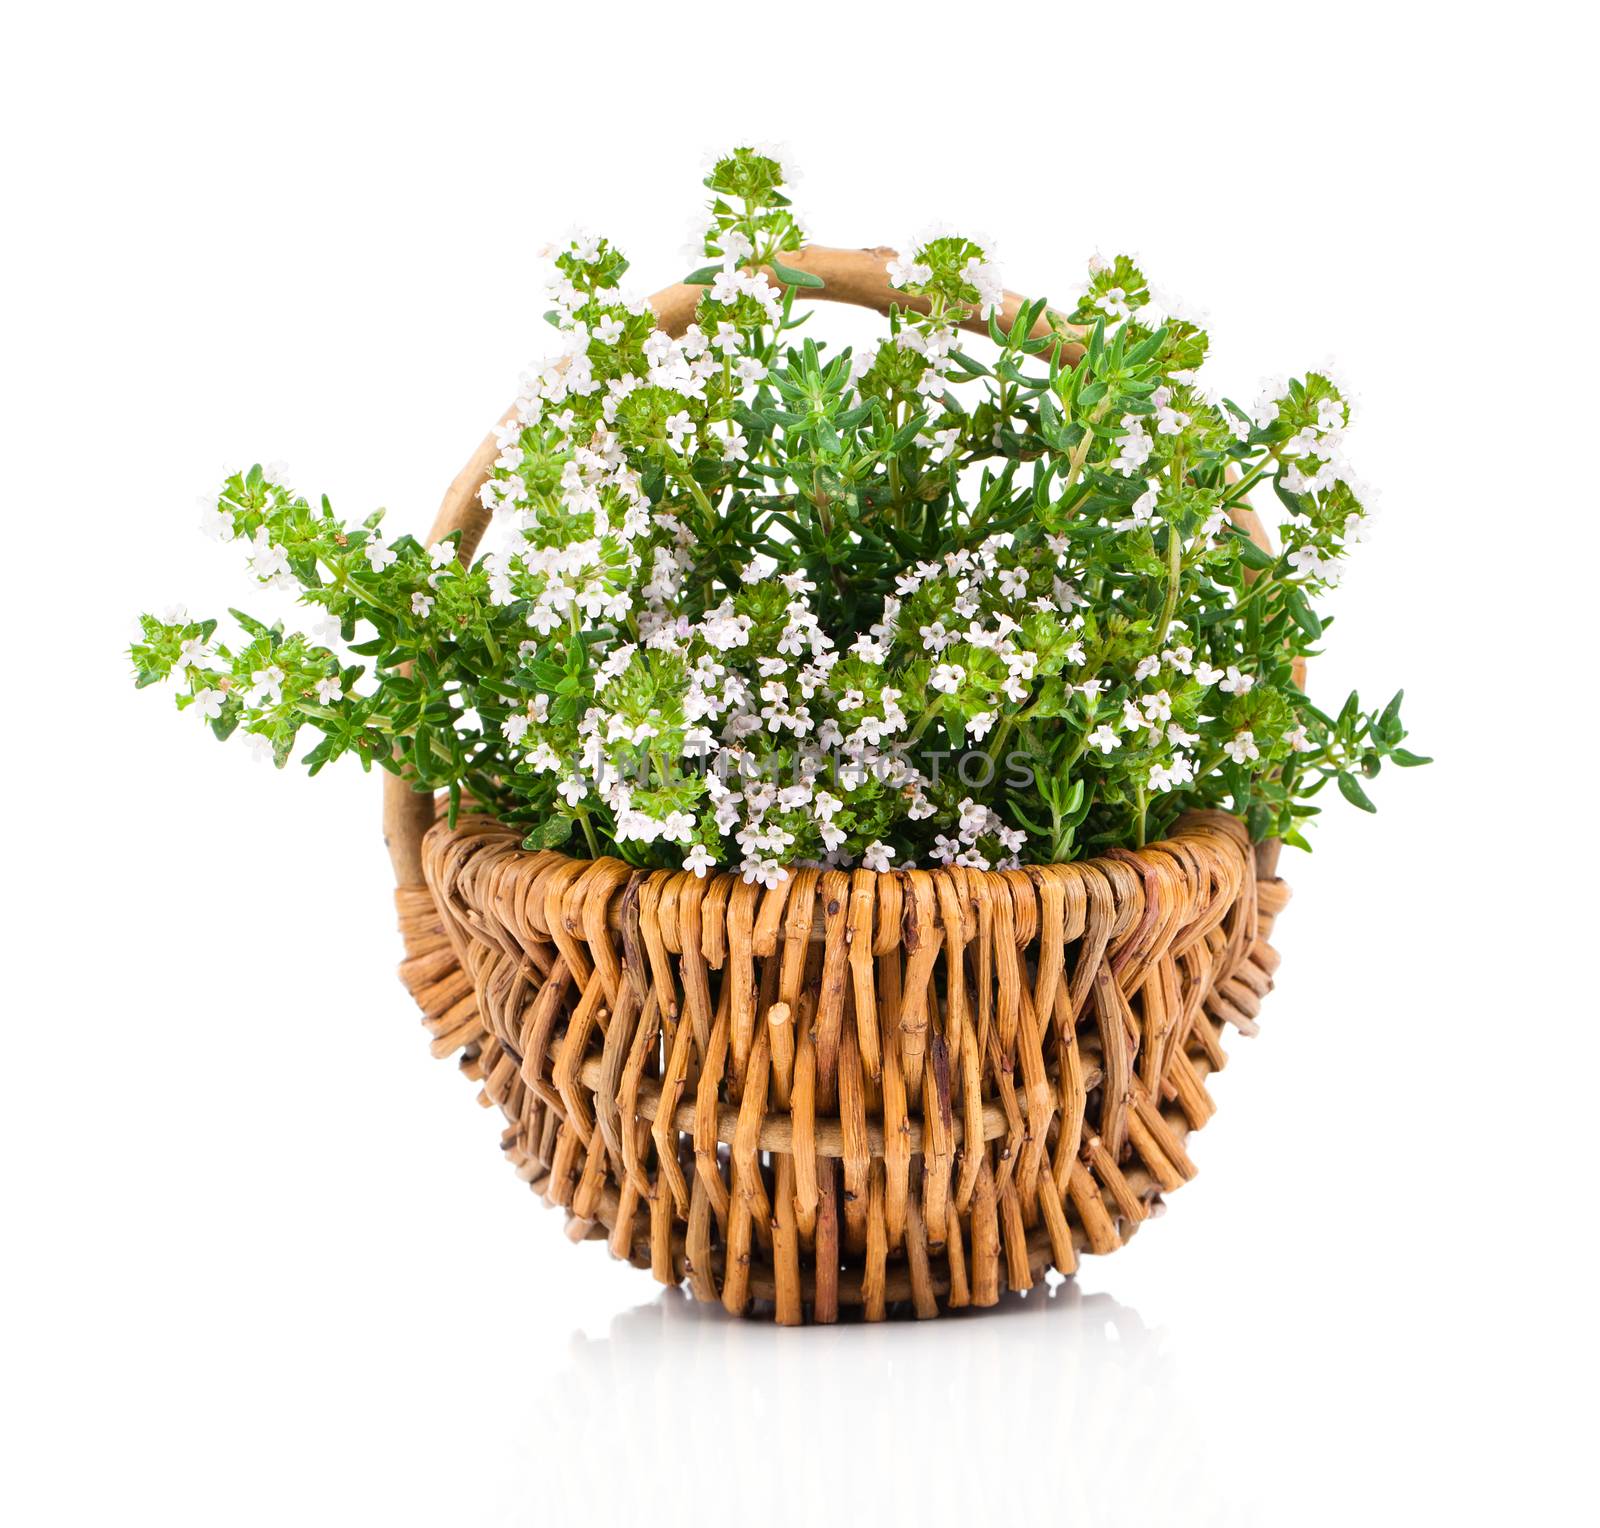 Bundle of fresh Thyme in a wicker basket, on a white background by motorolka